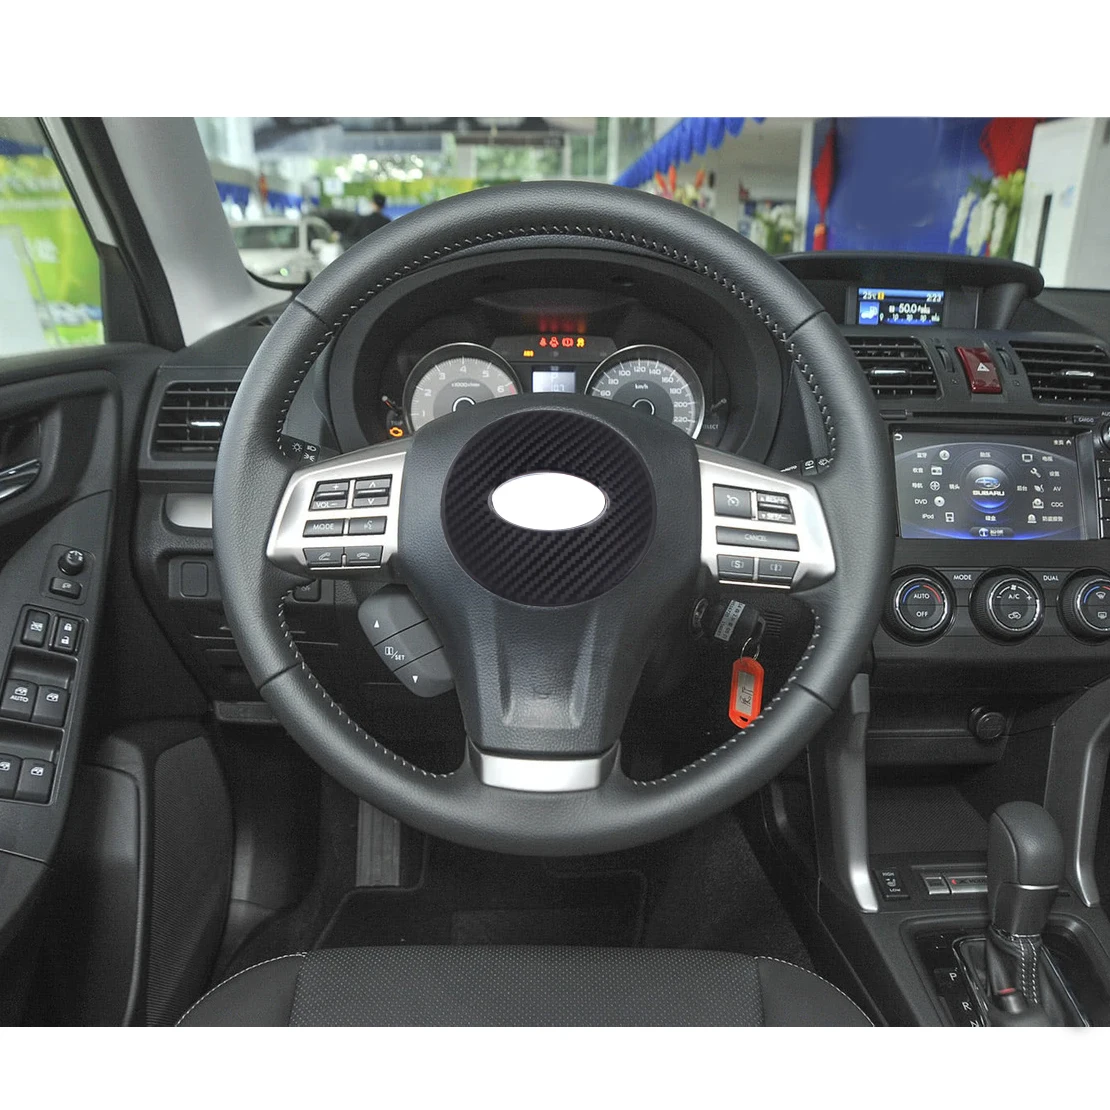 Naljepnica na Oblogu volana od karbonskih Vlakana crne boje, prikladan za Subaru Forester 2013 2016 2017 2018 Slika  0